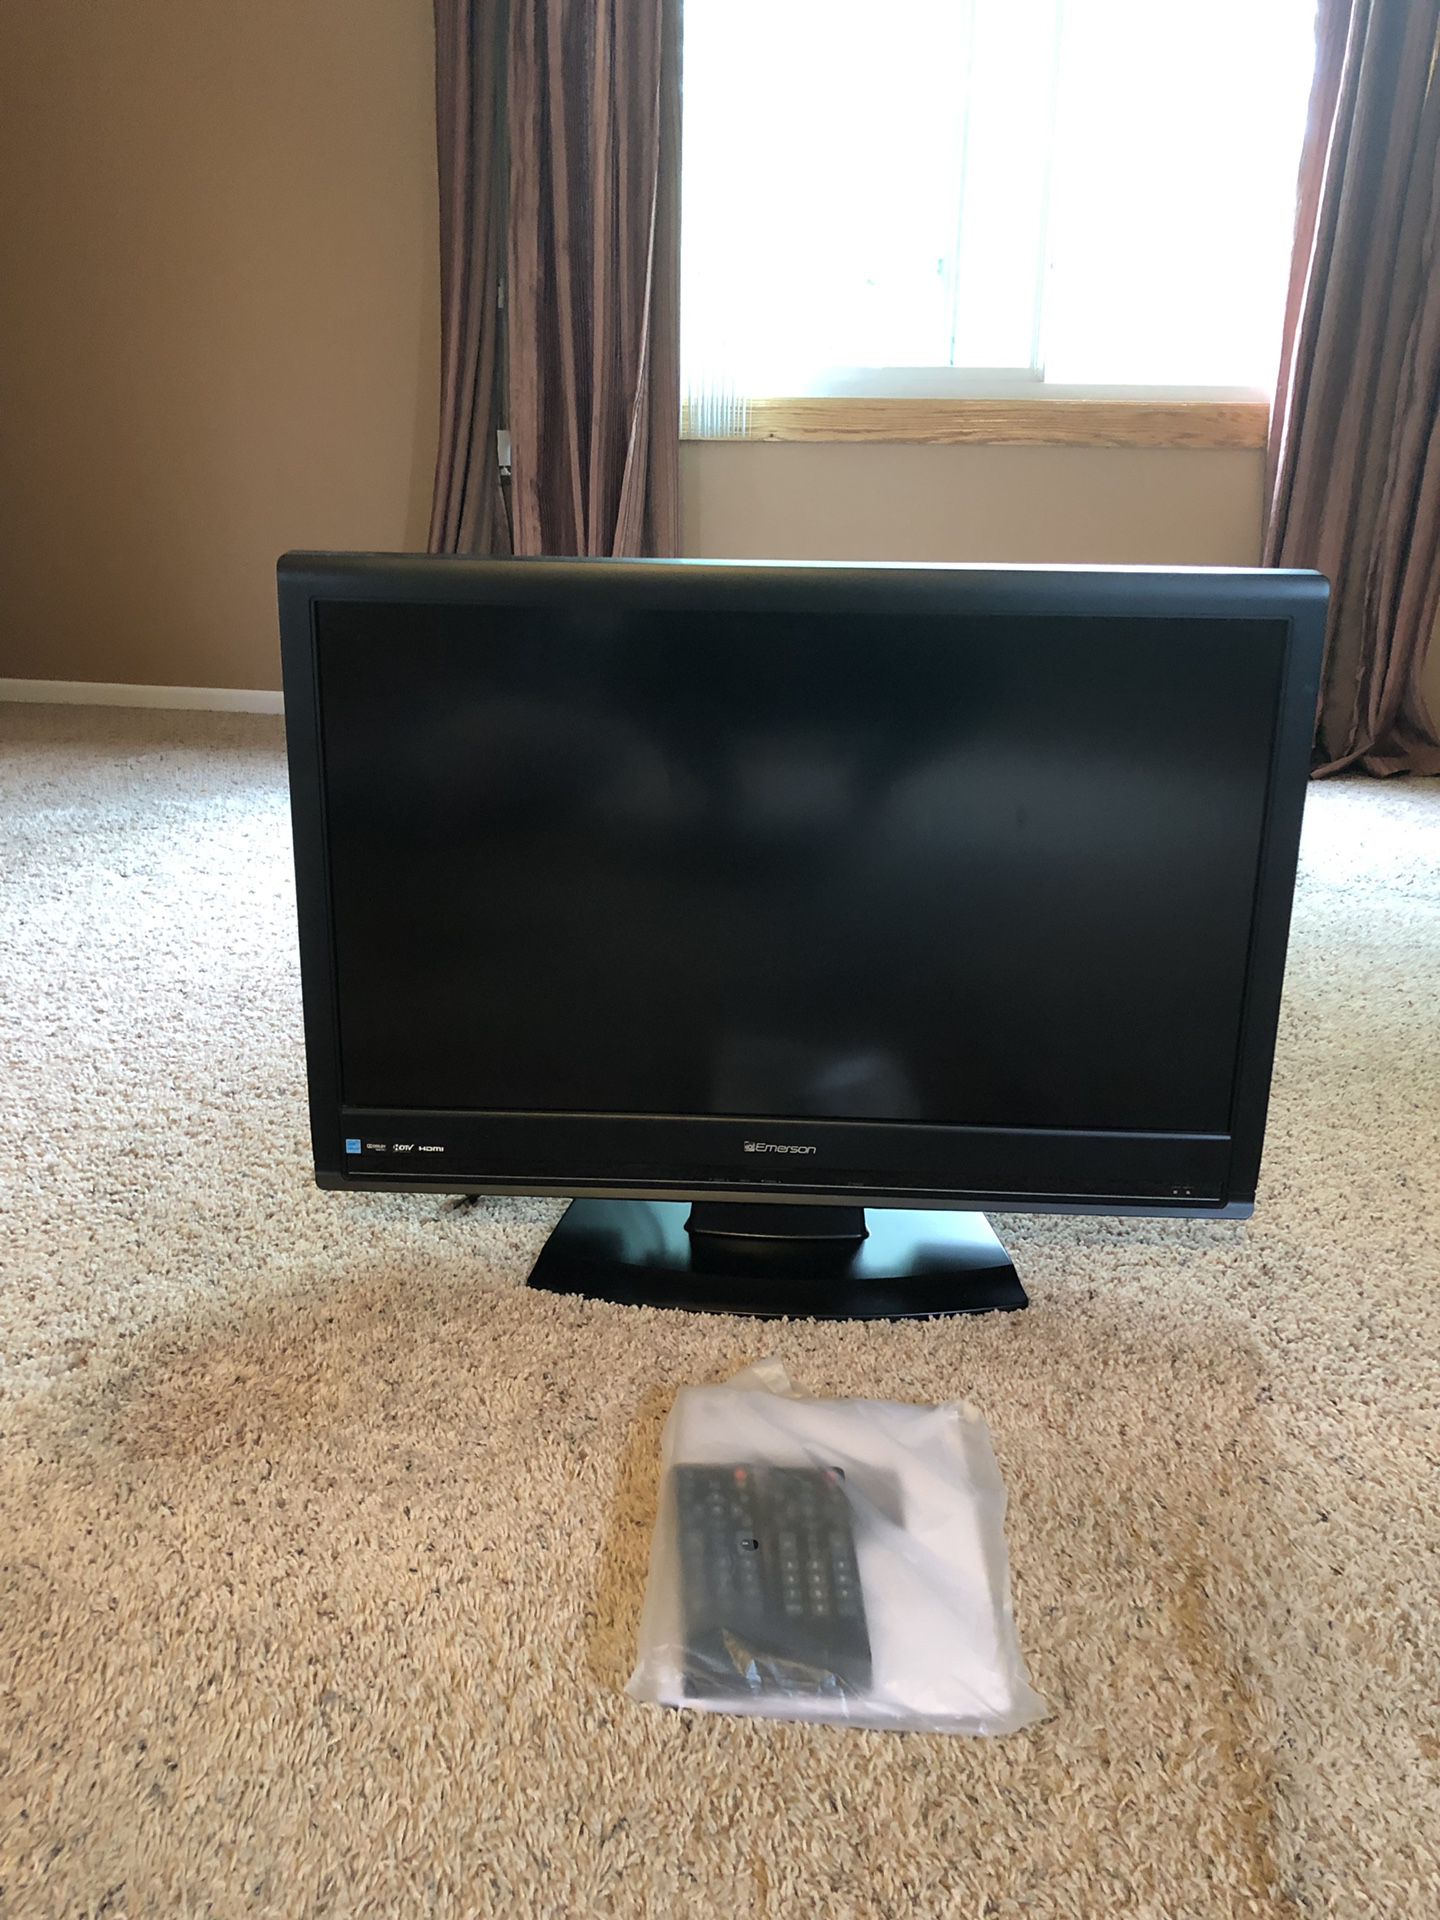 Emerson 32” Flat screen TV